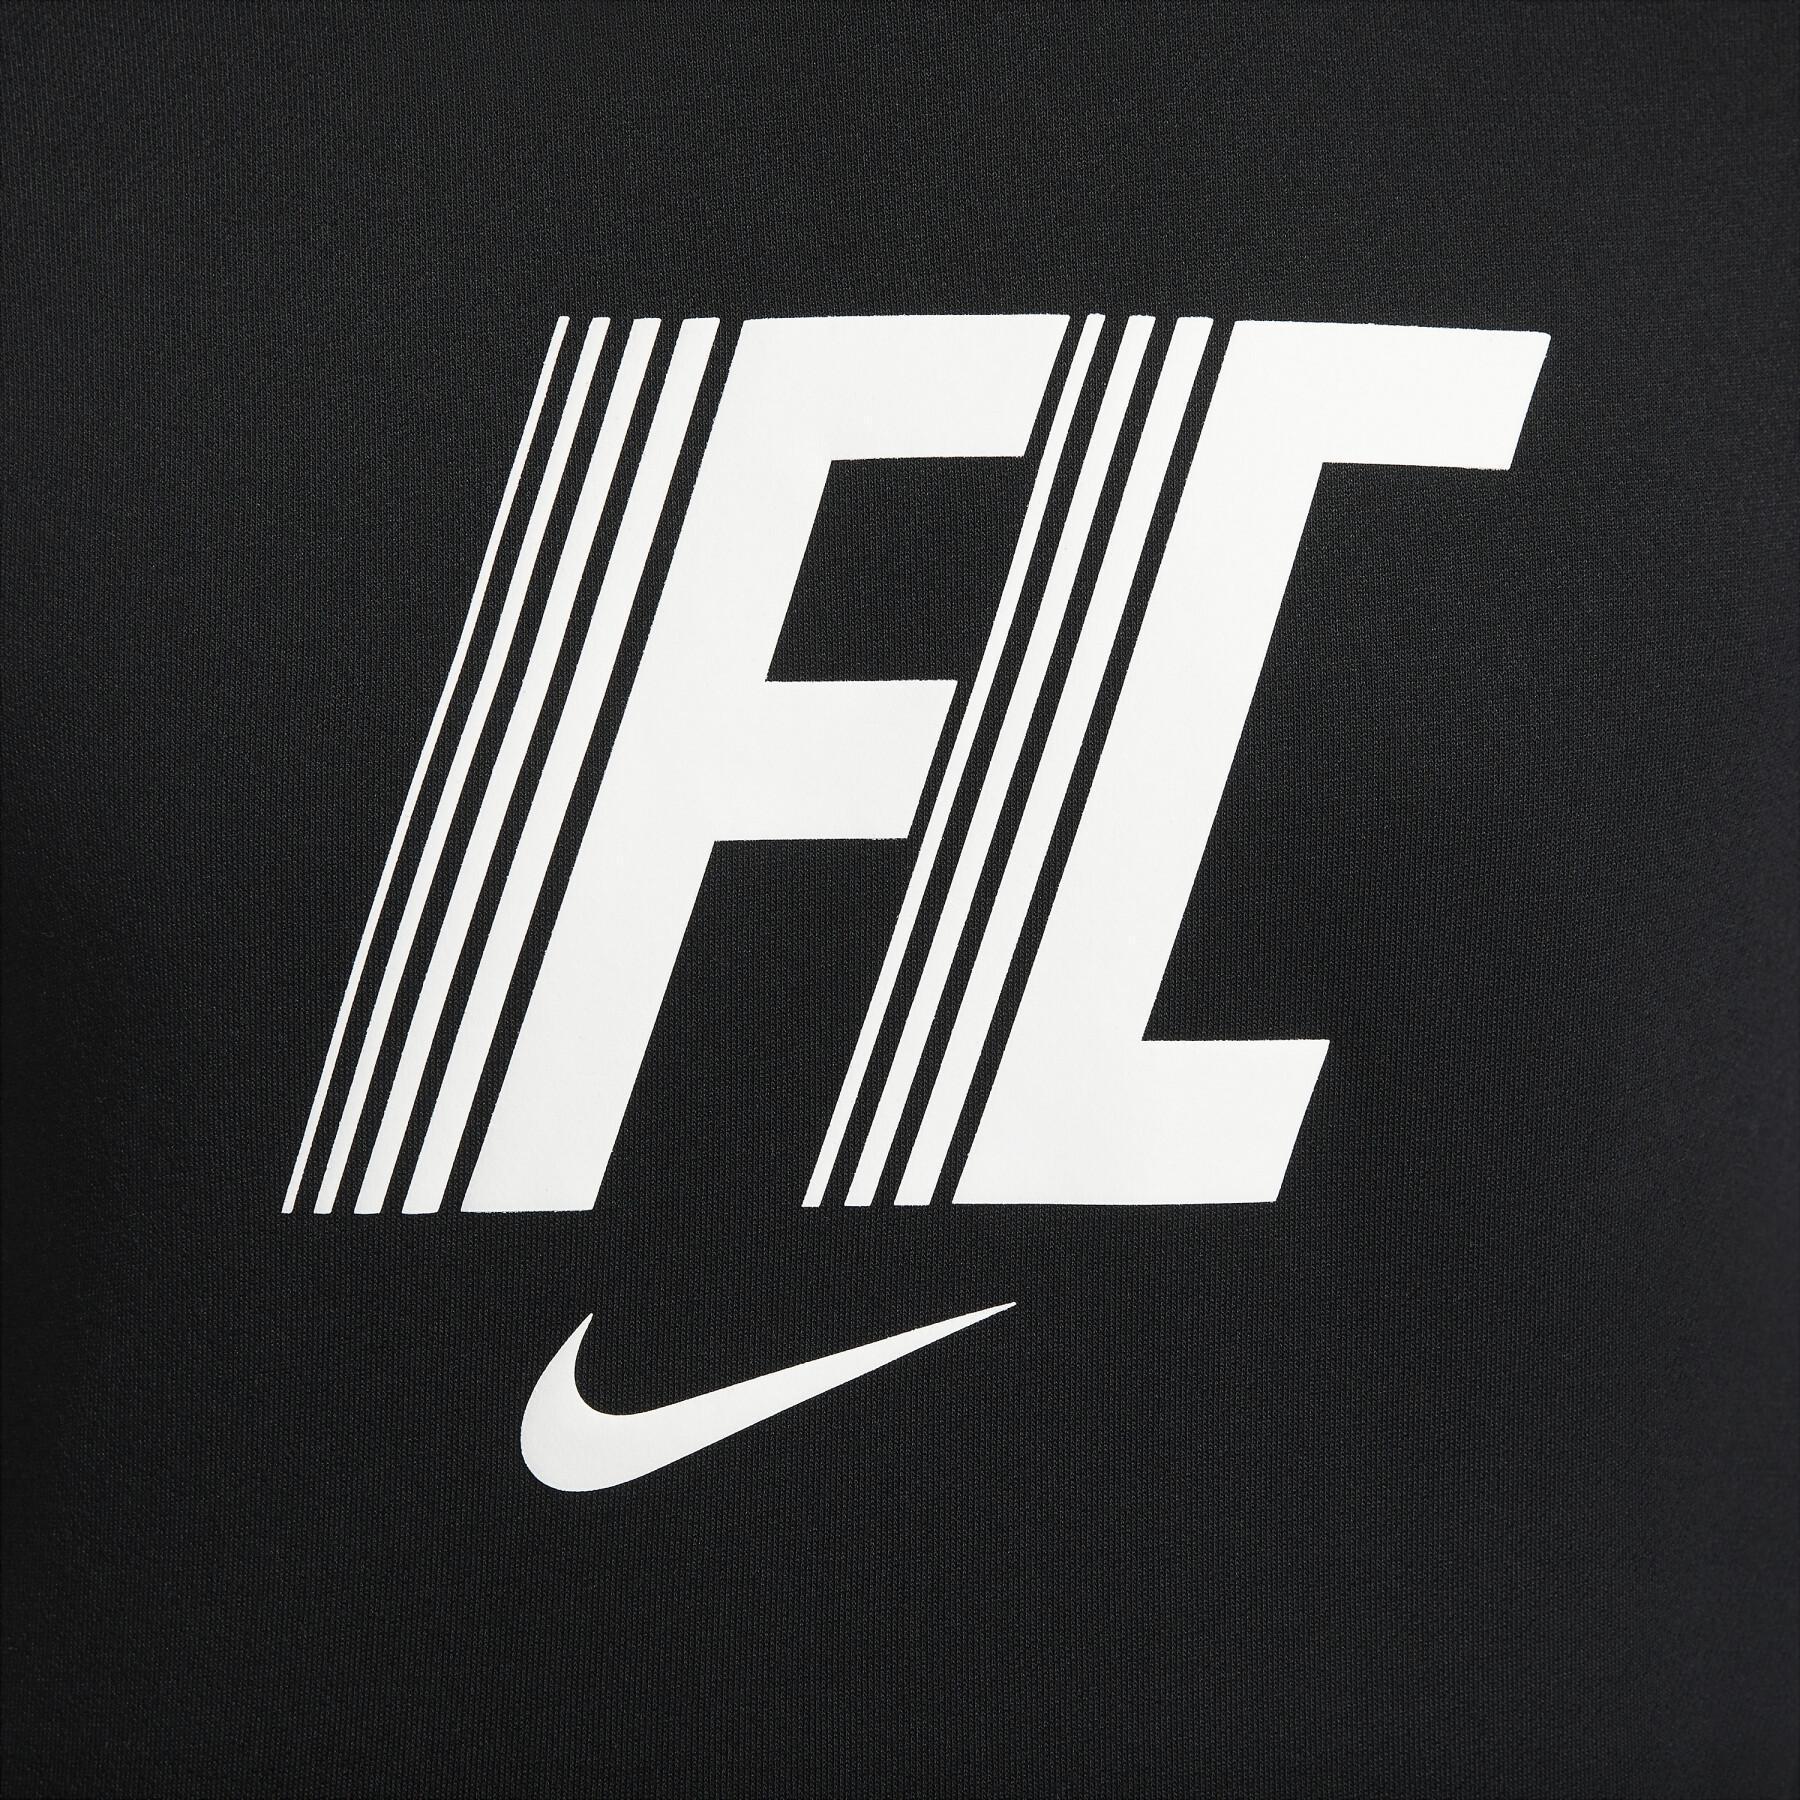 Sweatshirt con capucha Nike Dri-FIT FC